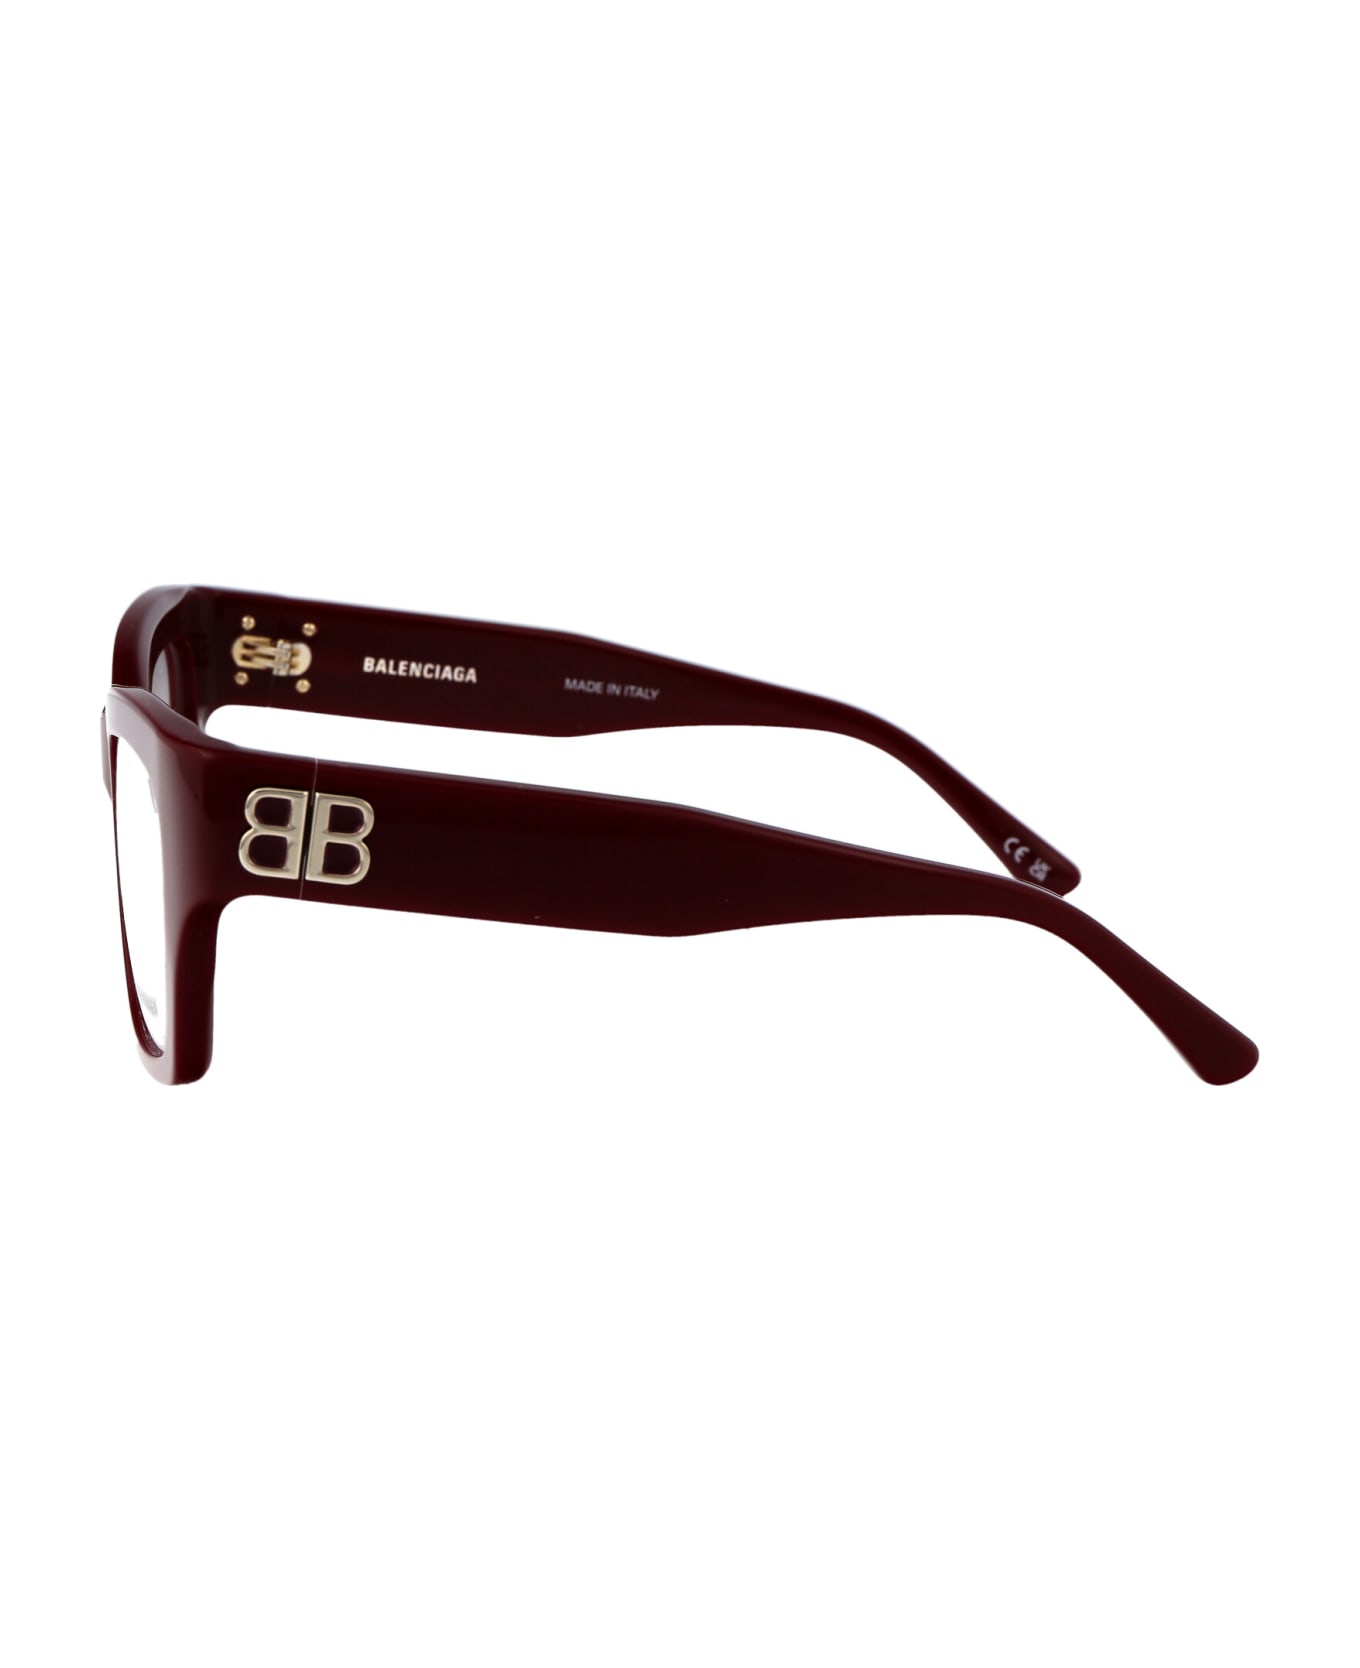 Balenciaga Eyewear Glasses - 009 BURGUNDY BURGUNDY TRANSPARENT アイウェア